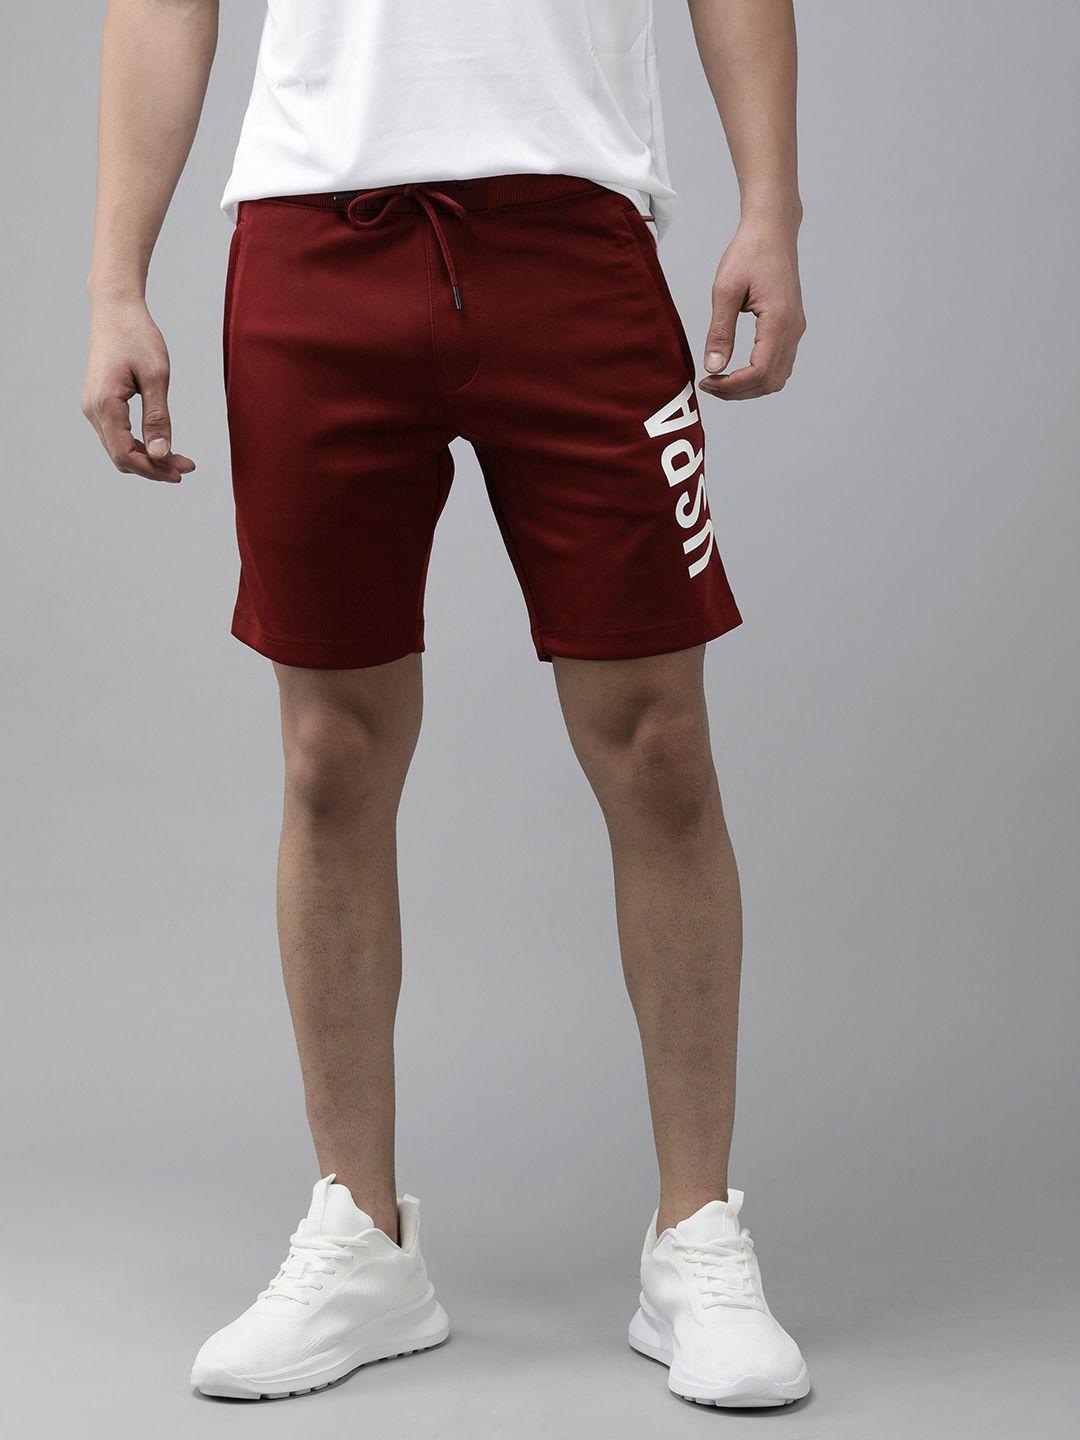 u.s. polo assn. men brand logo printed slim fit shorts